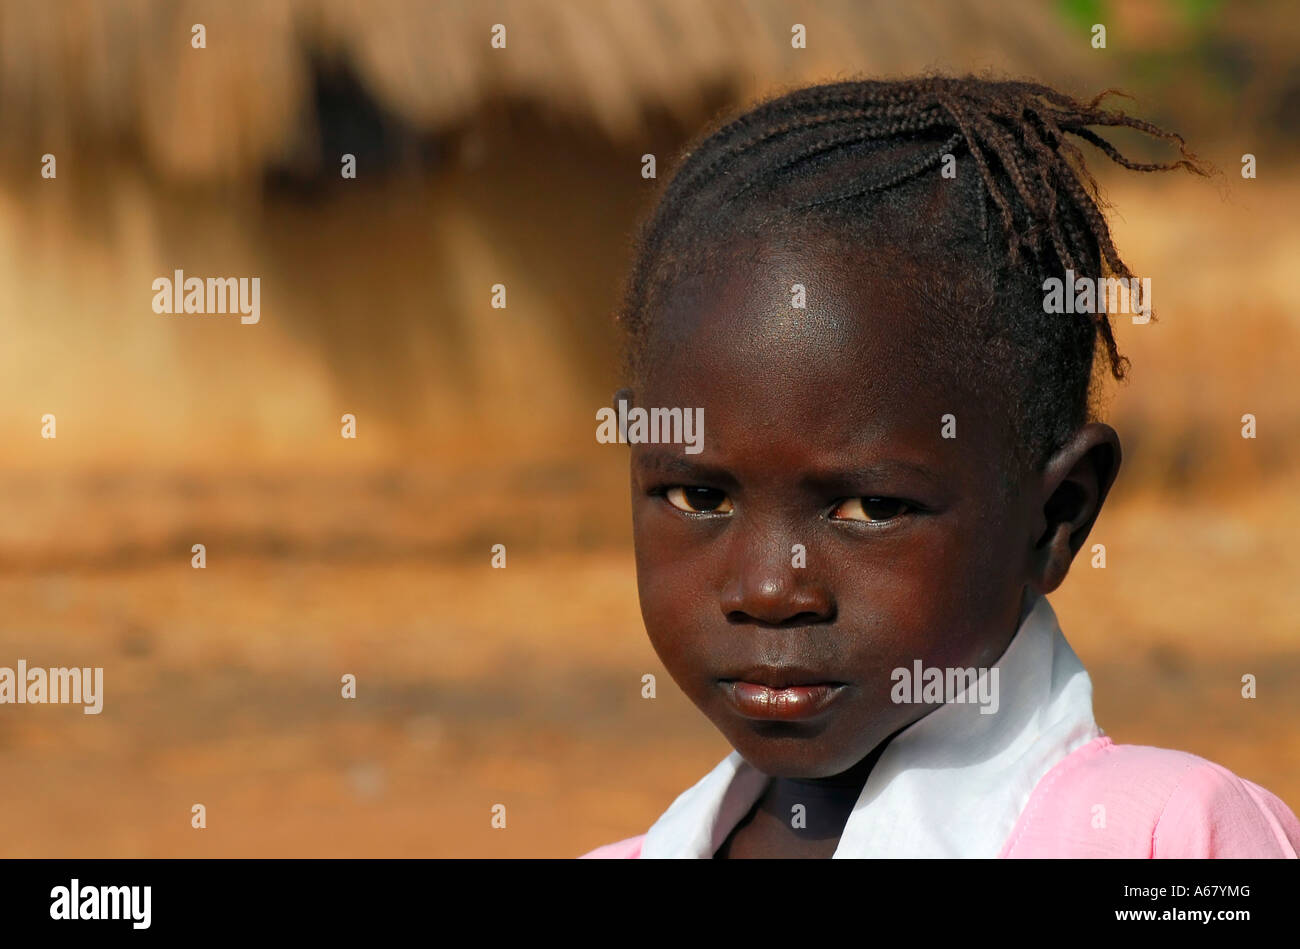 School Girl in tendaba, Gambie, Afrique Banque D'Images